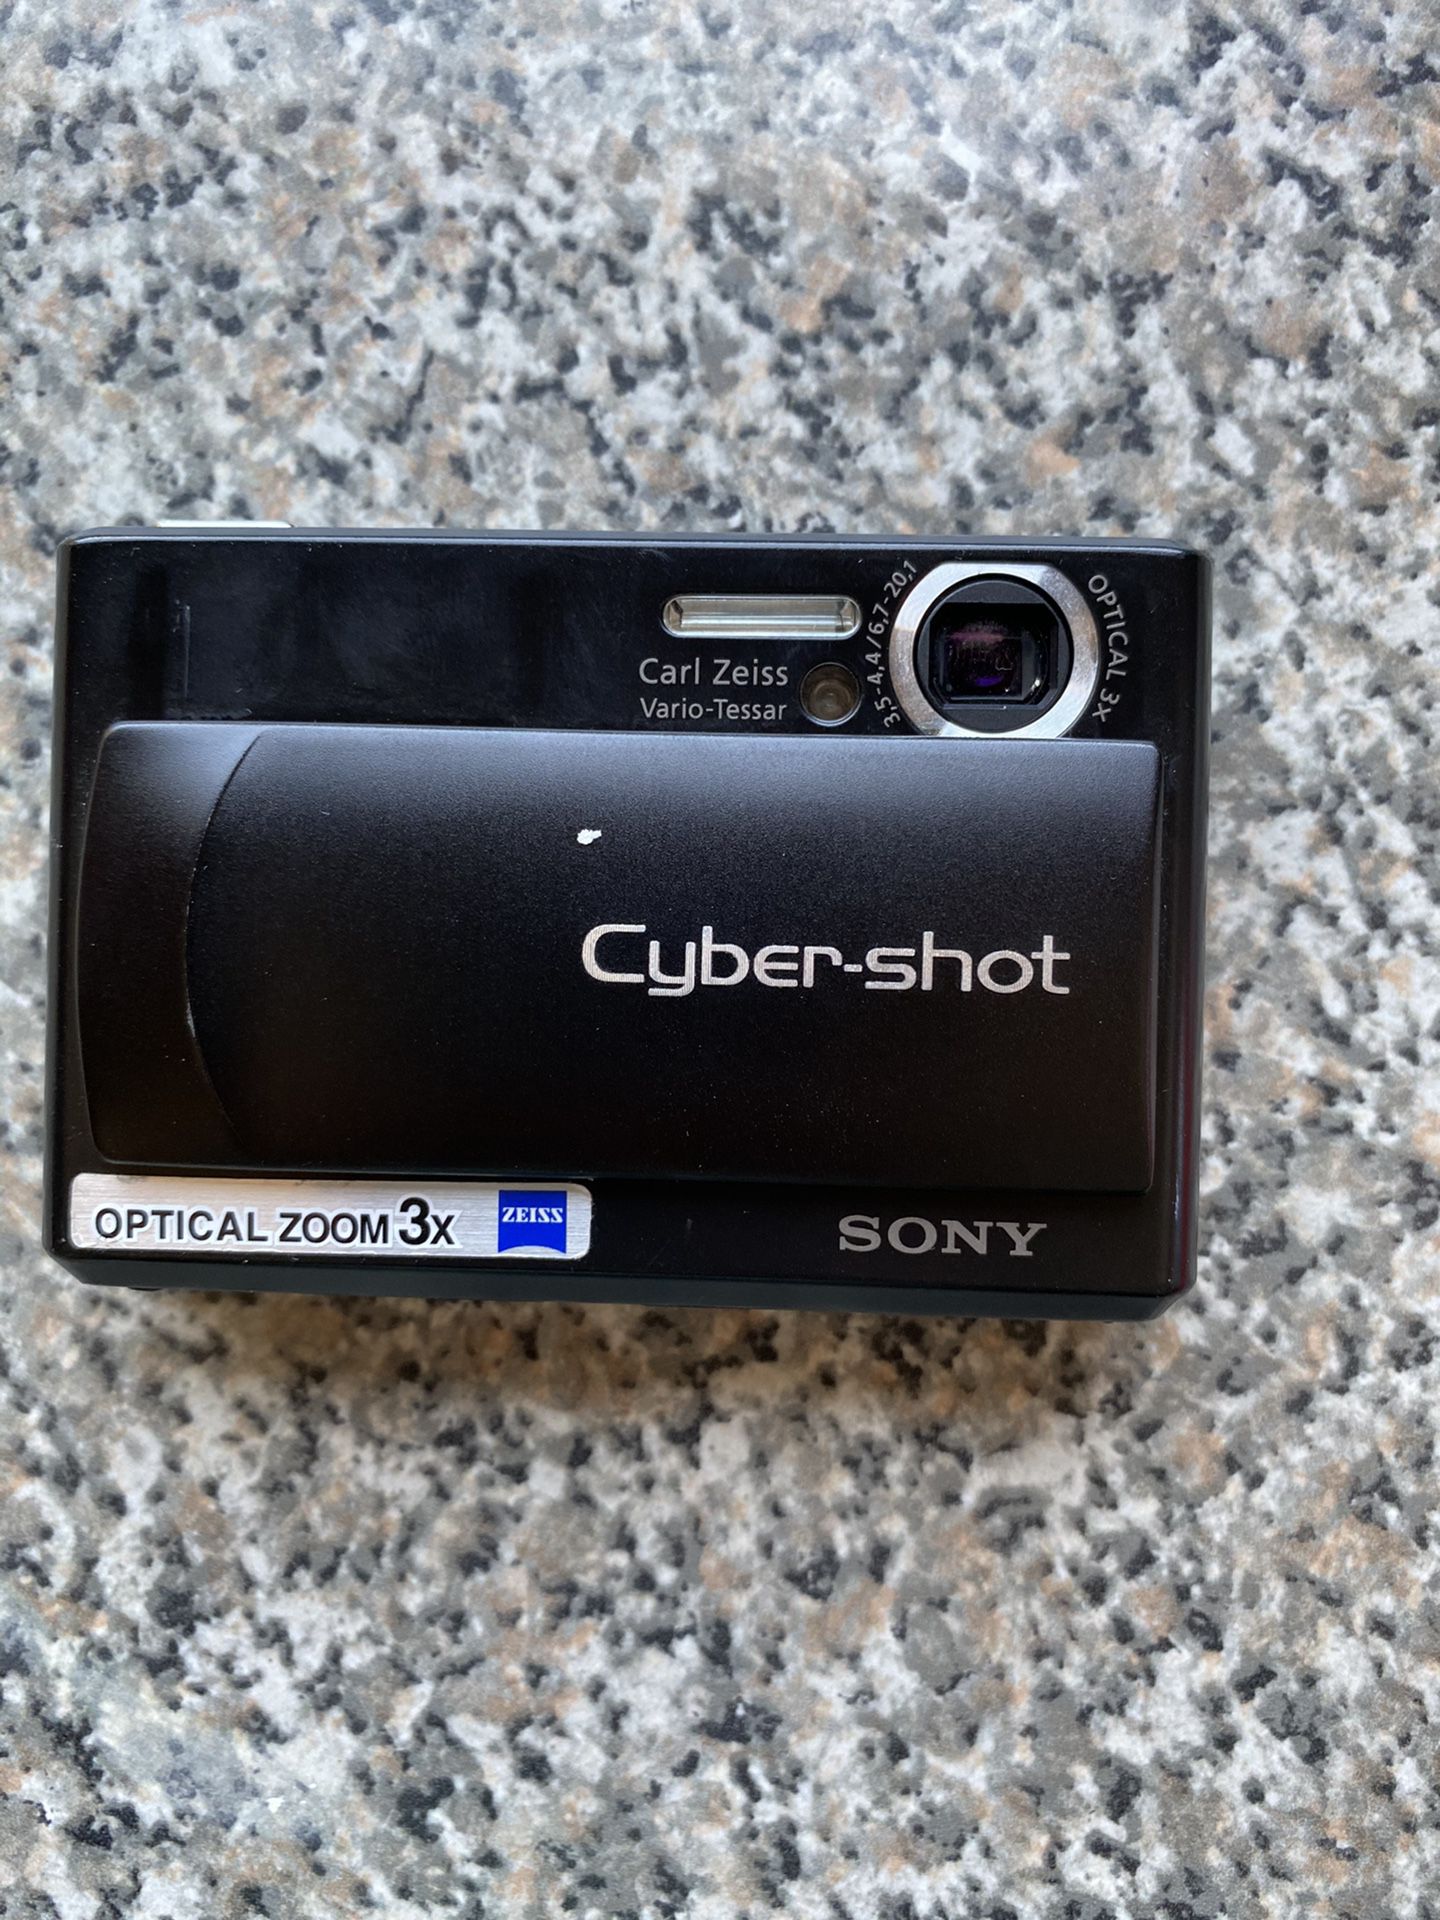 Sony cyber-shot DSC-T1 5 MP digital camera - black